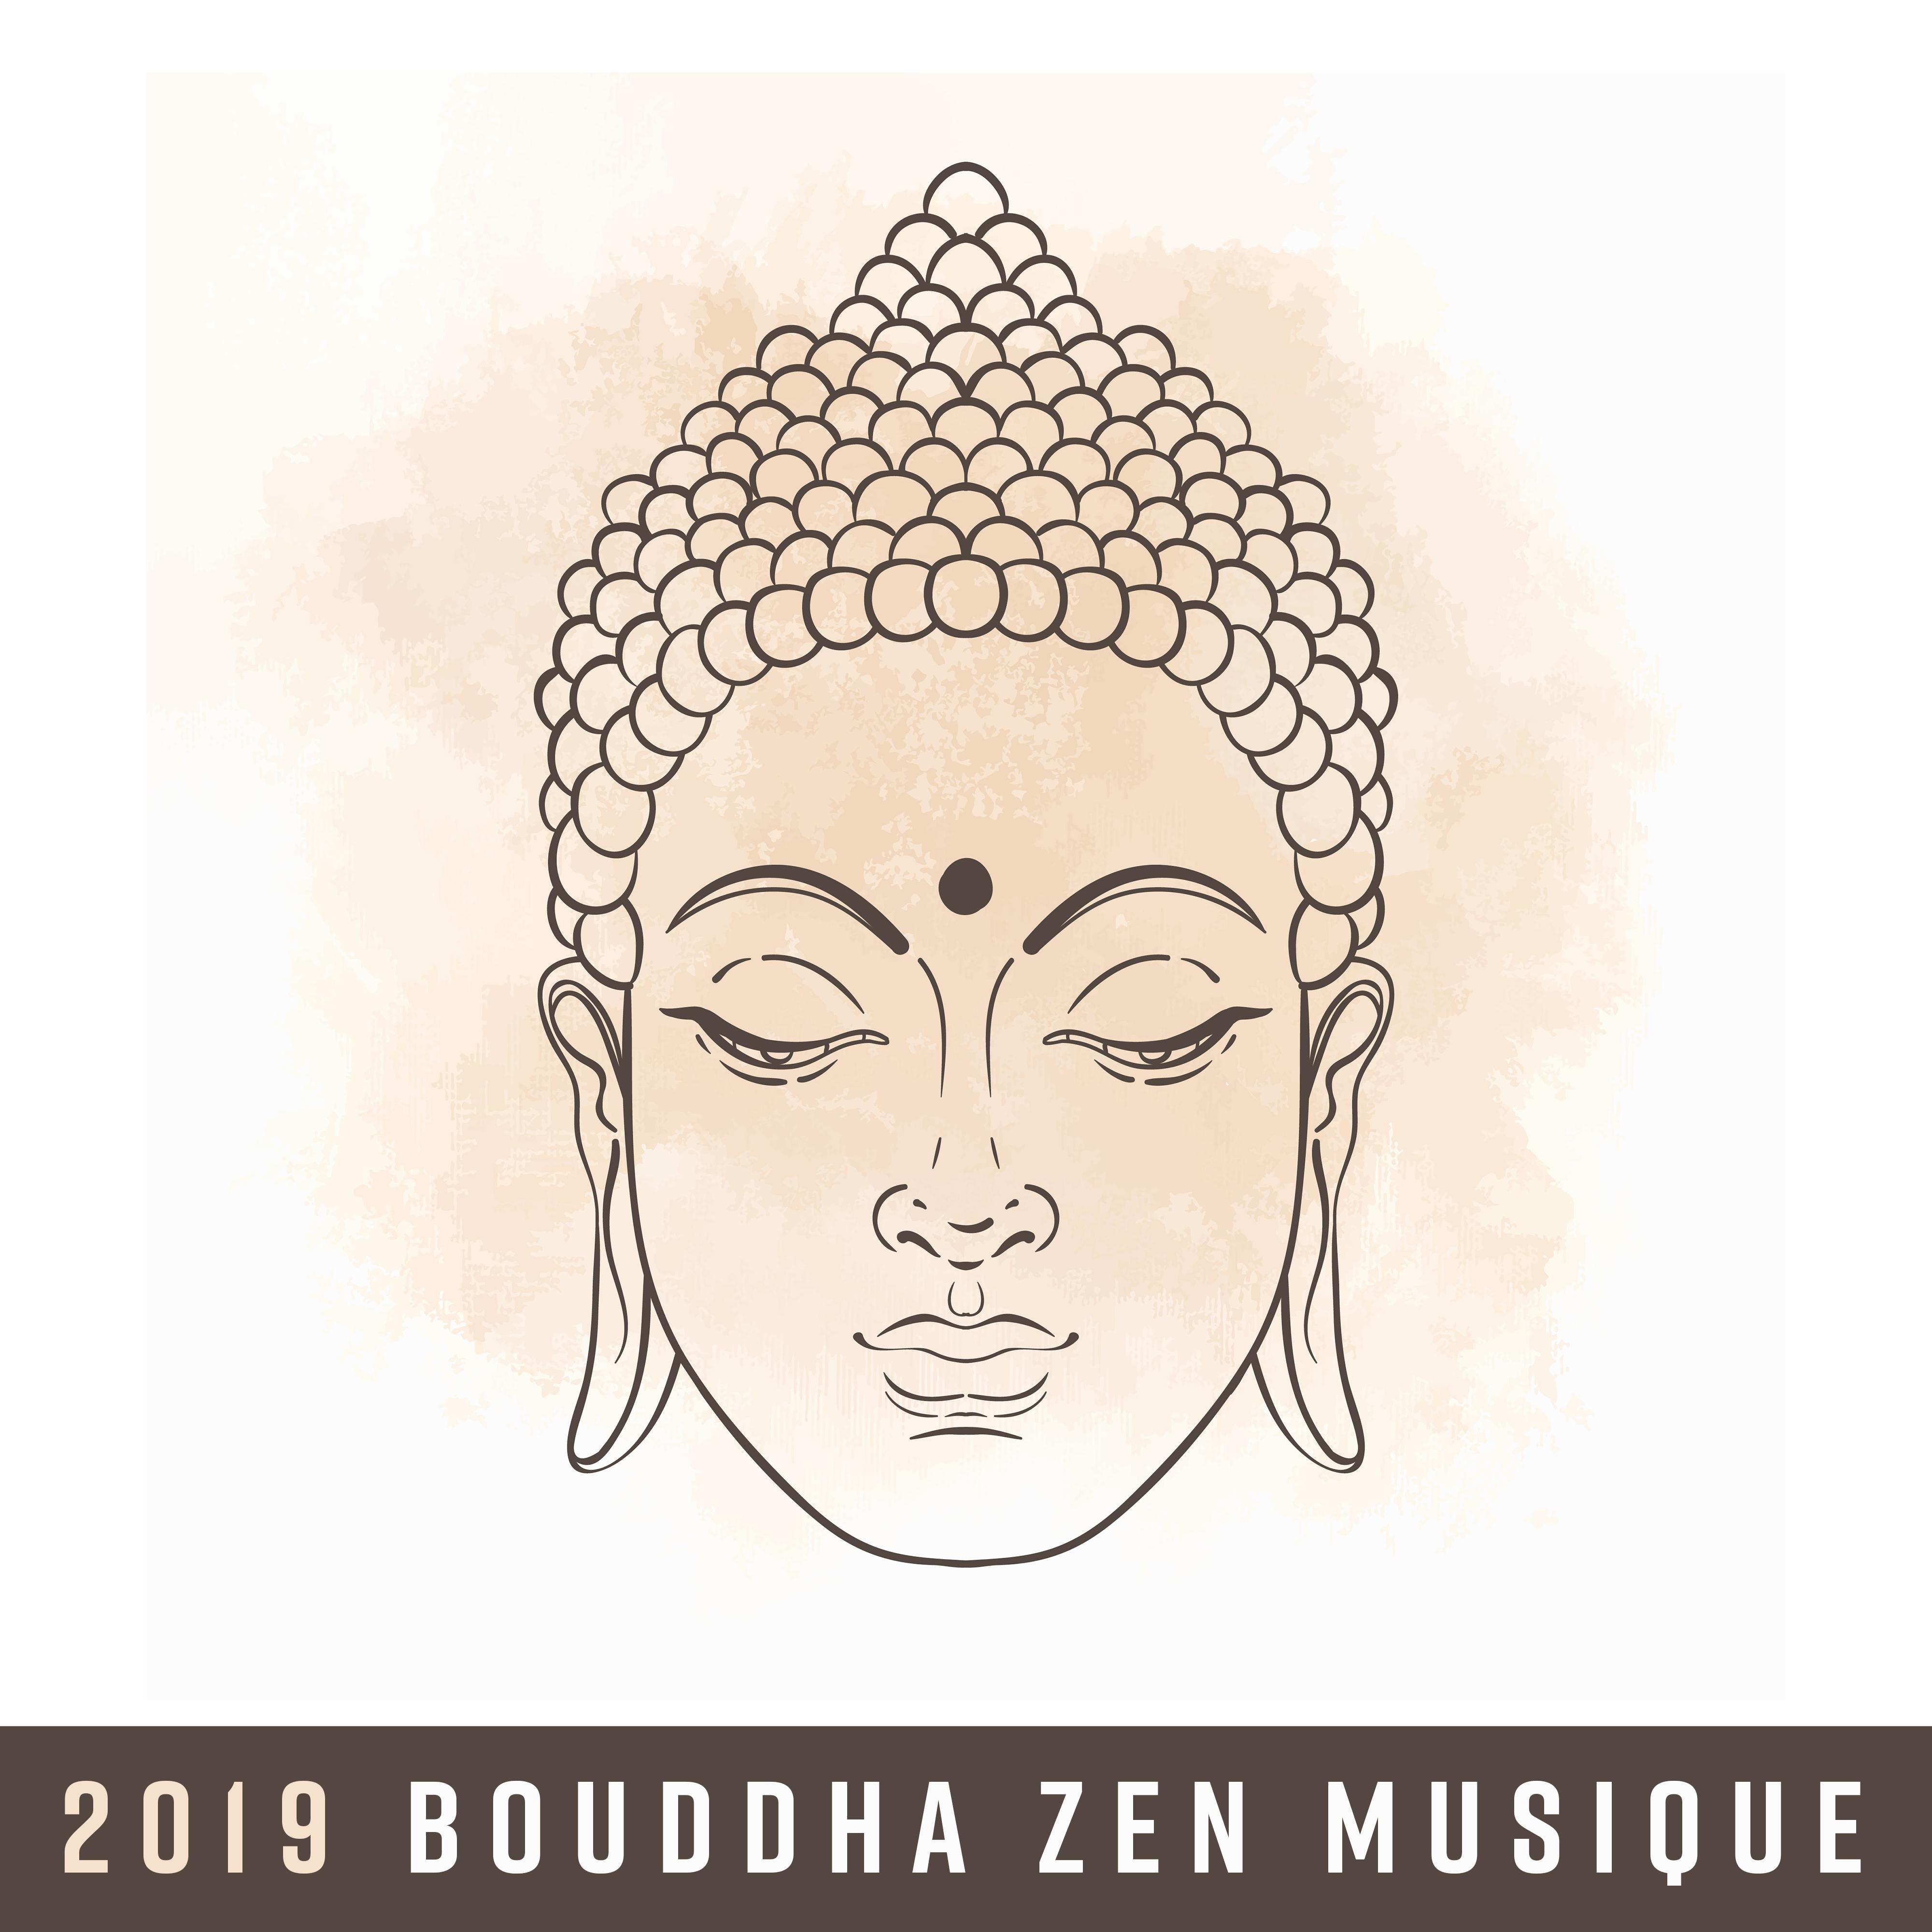 2019 Bouddha zen musique  Me ditation profonde, Bar, Lounge, Relaxation, Profonde harmonie, Musique calme, Bouddha tibe tain, Yoga